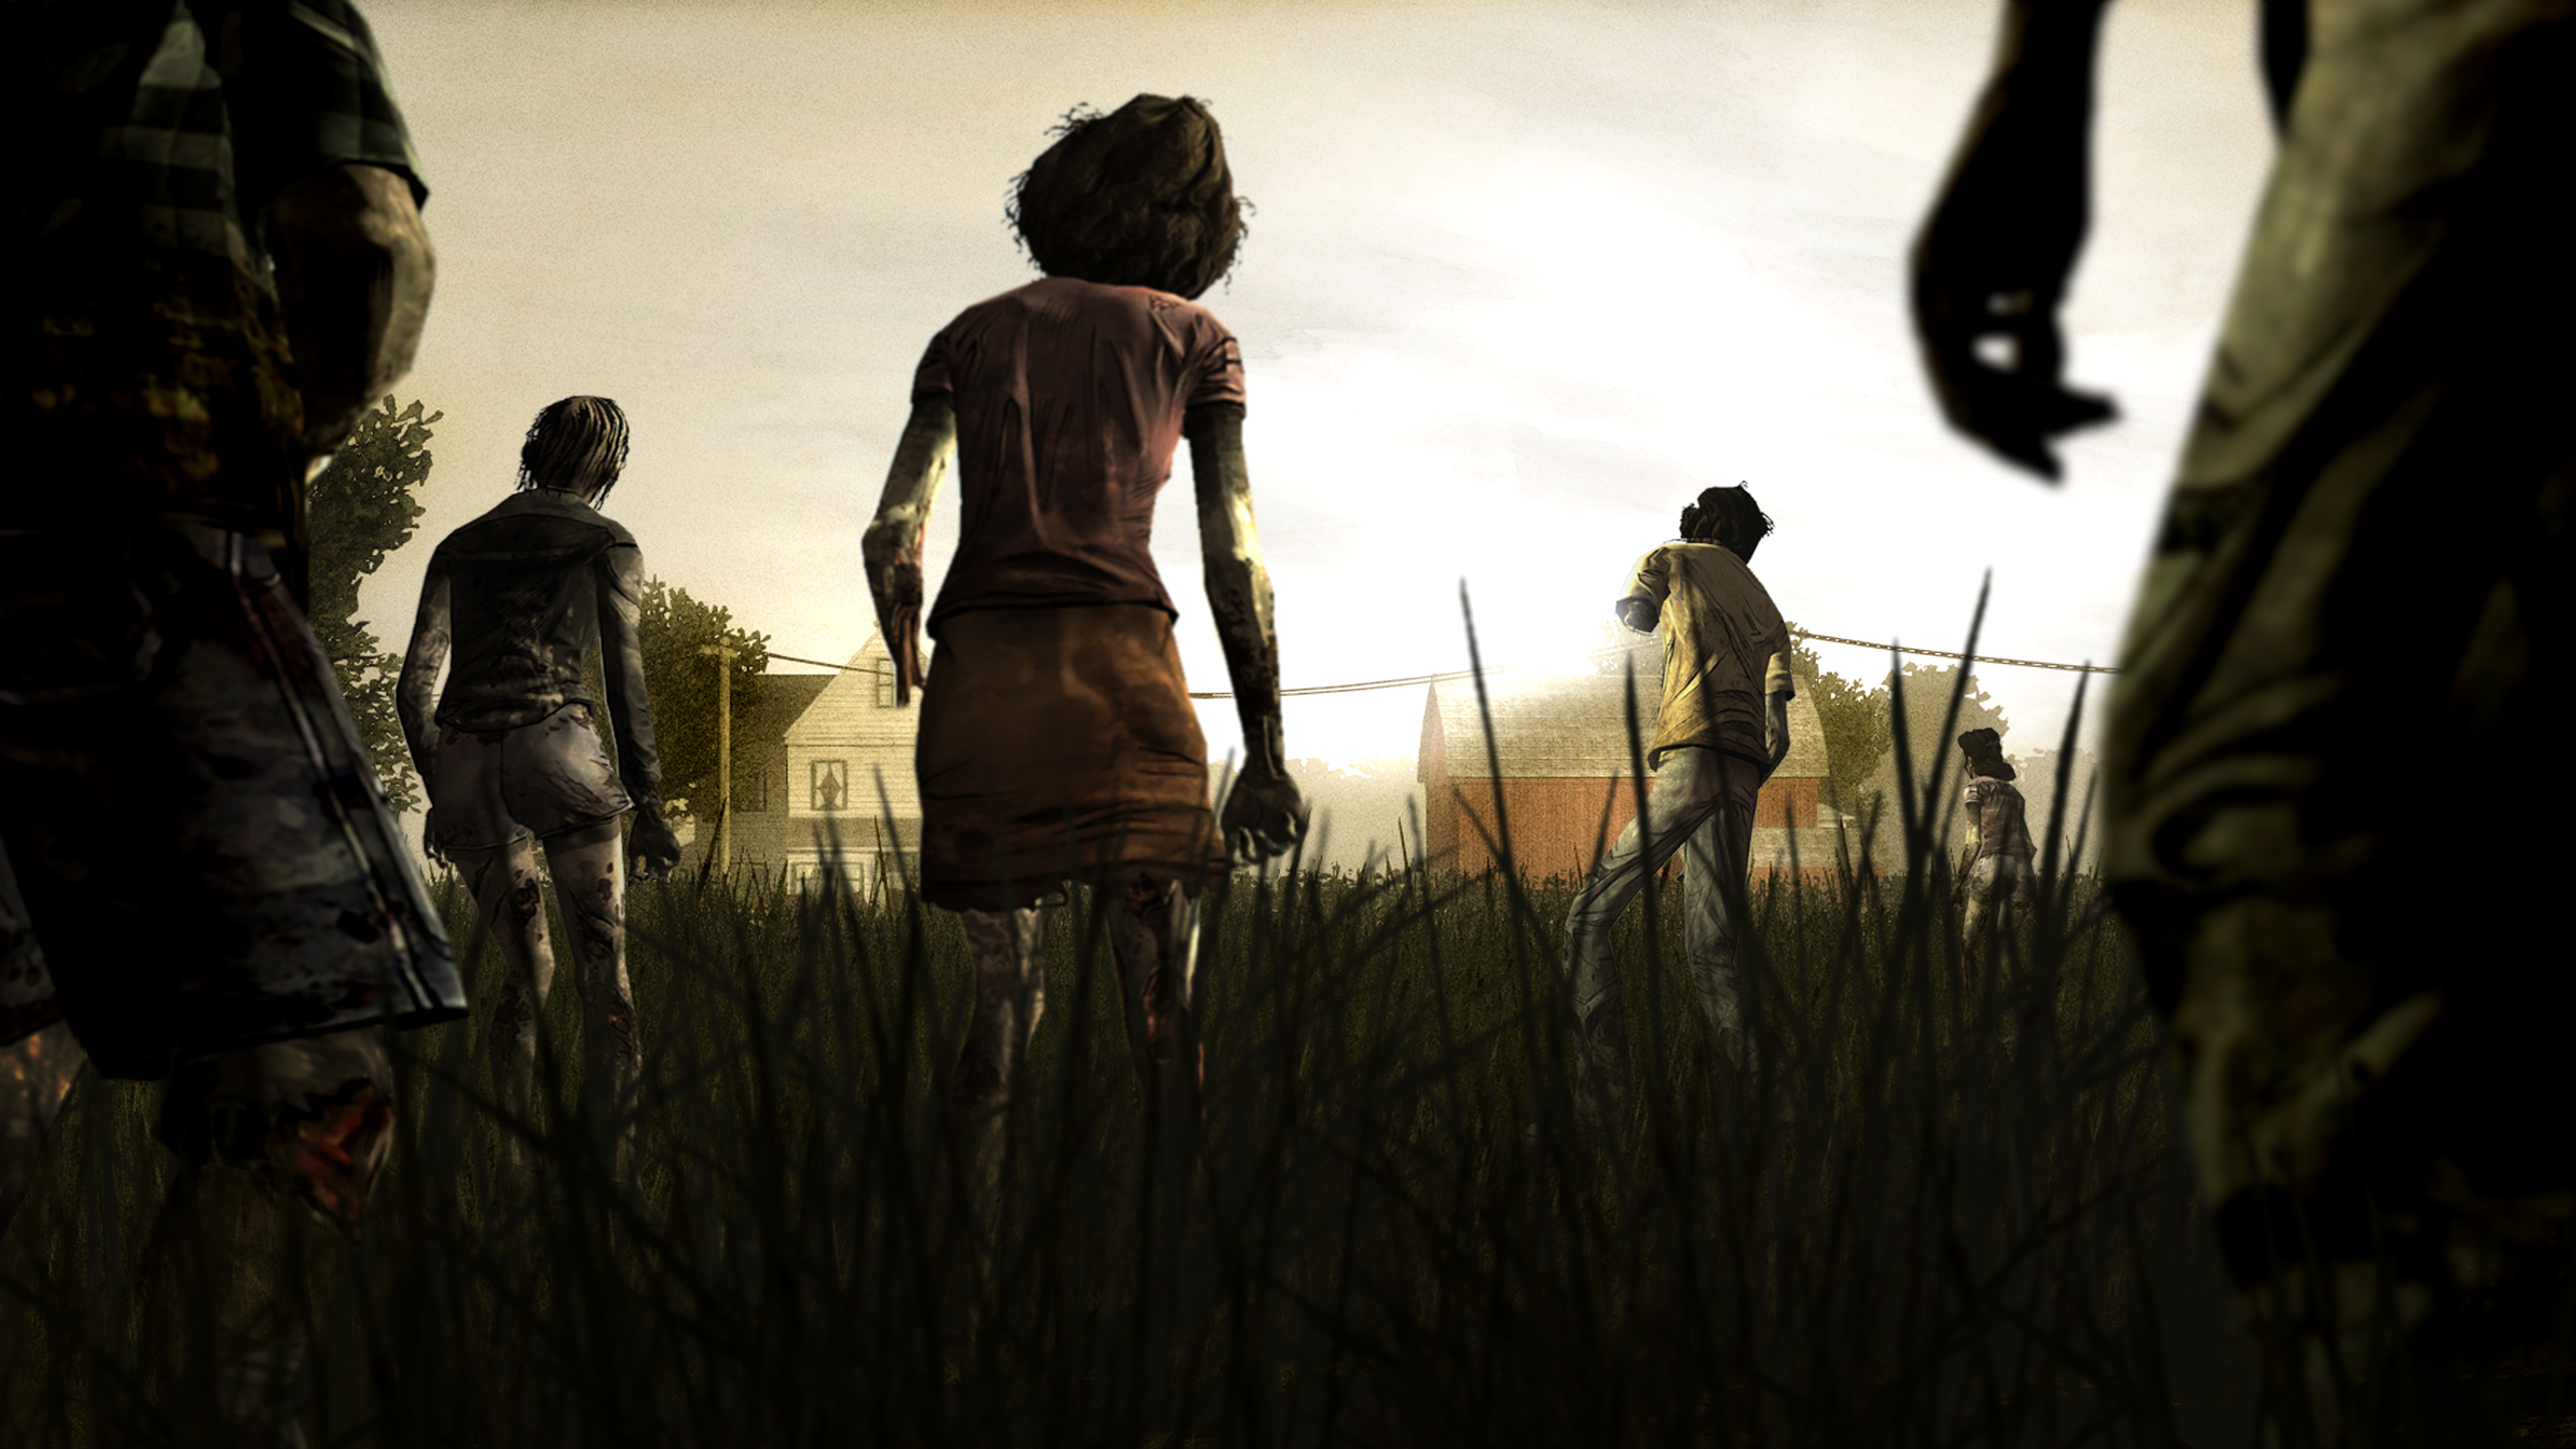 video game, the walking dead: season 1